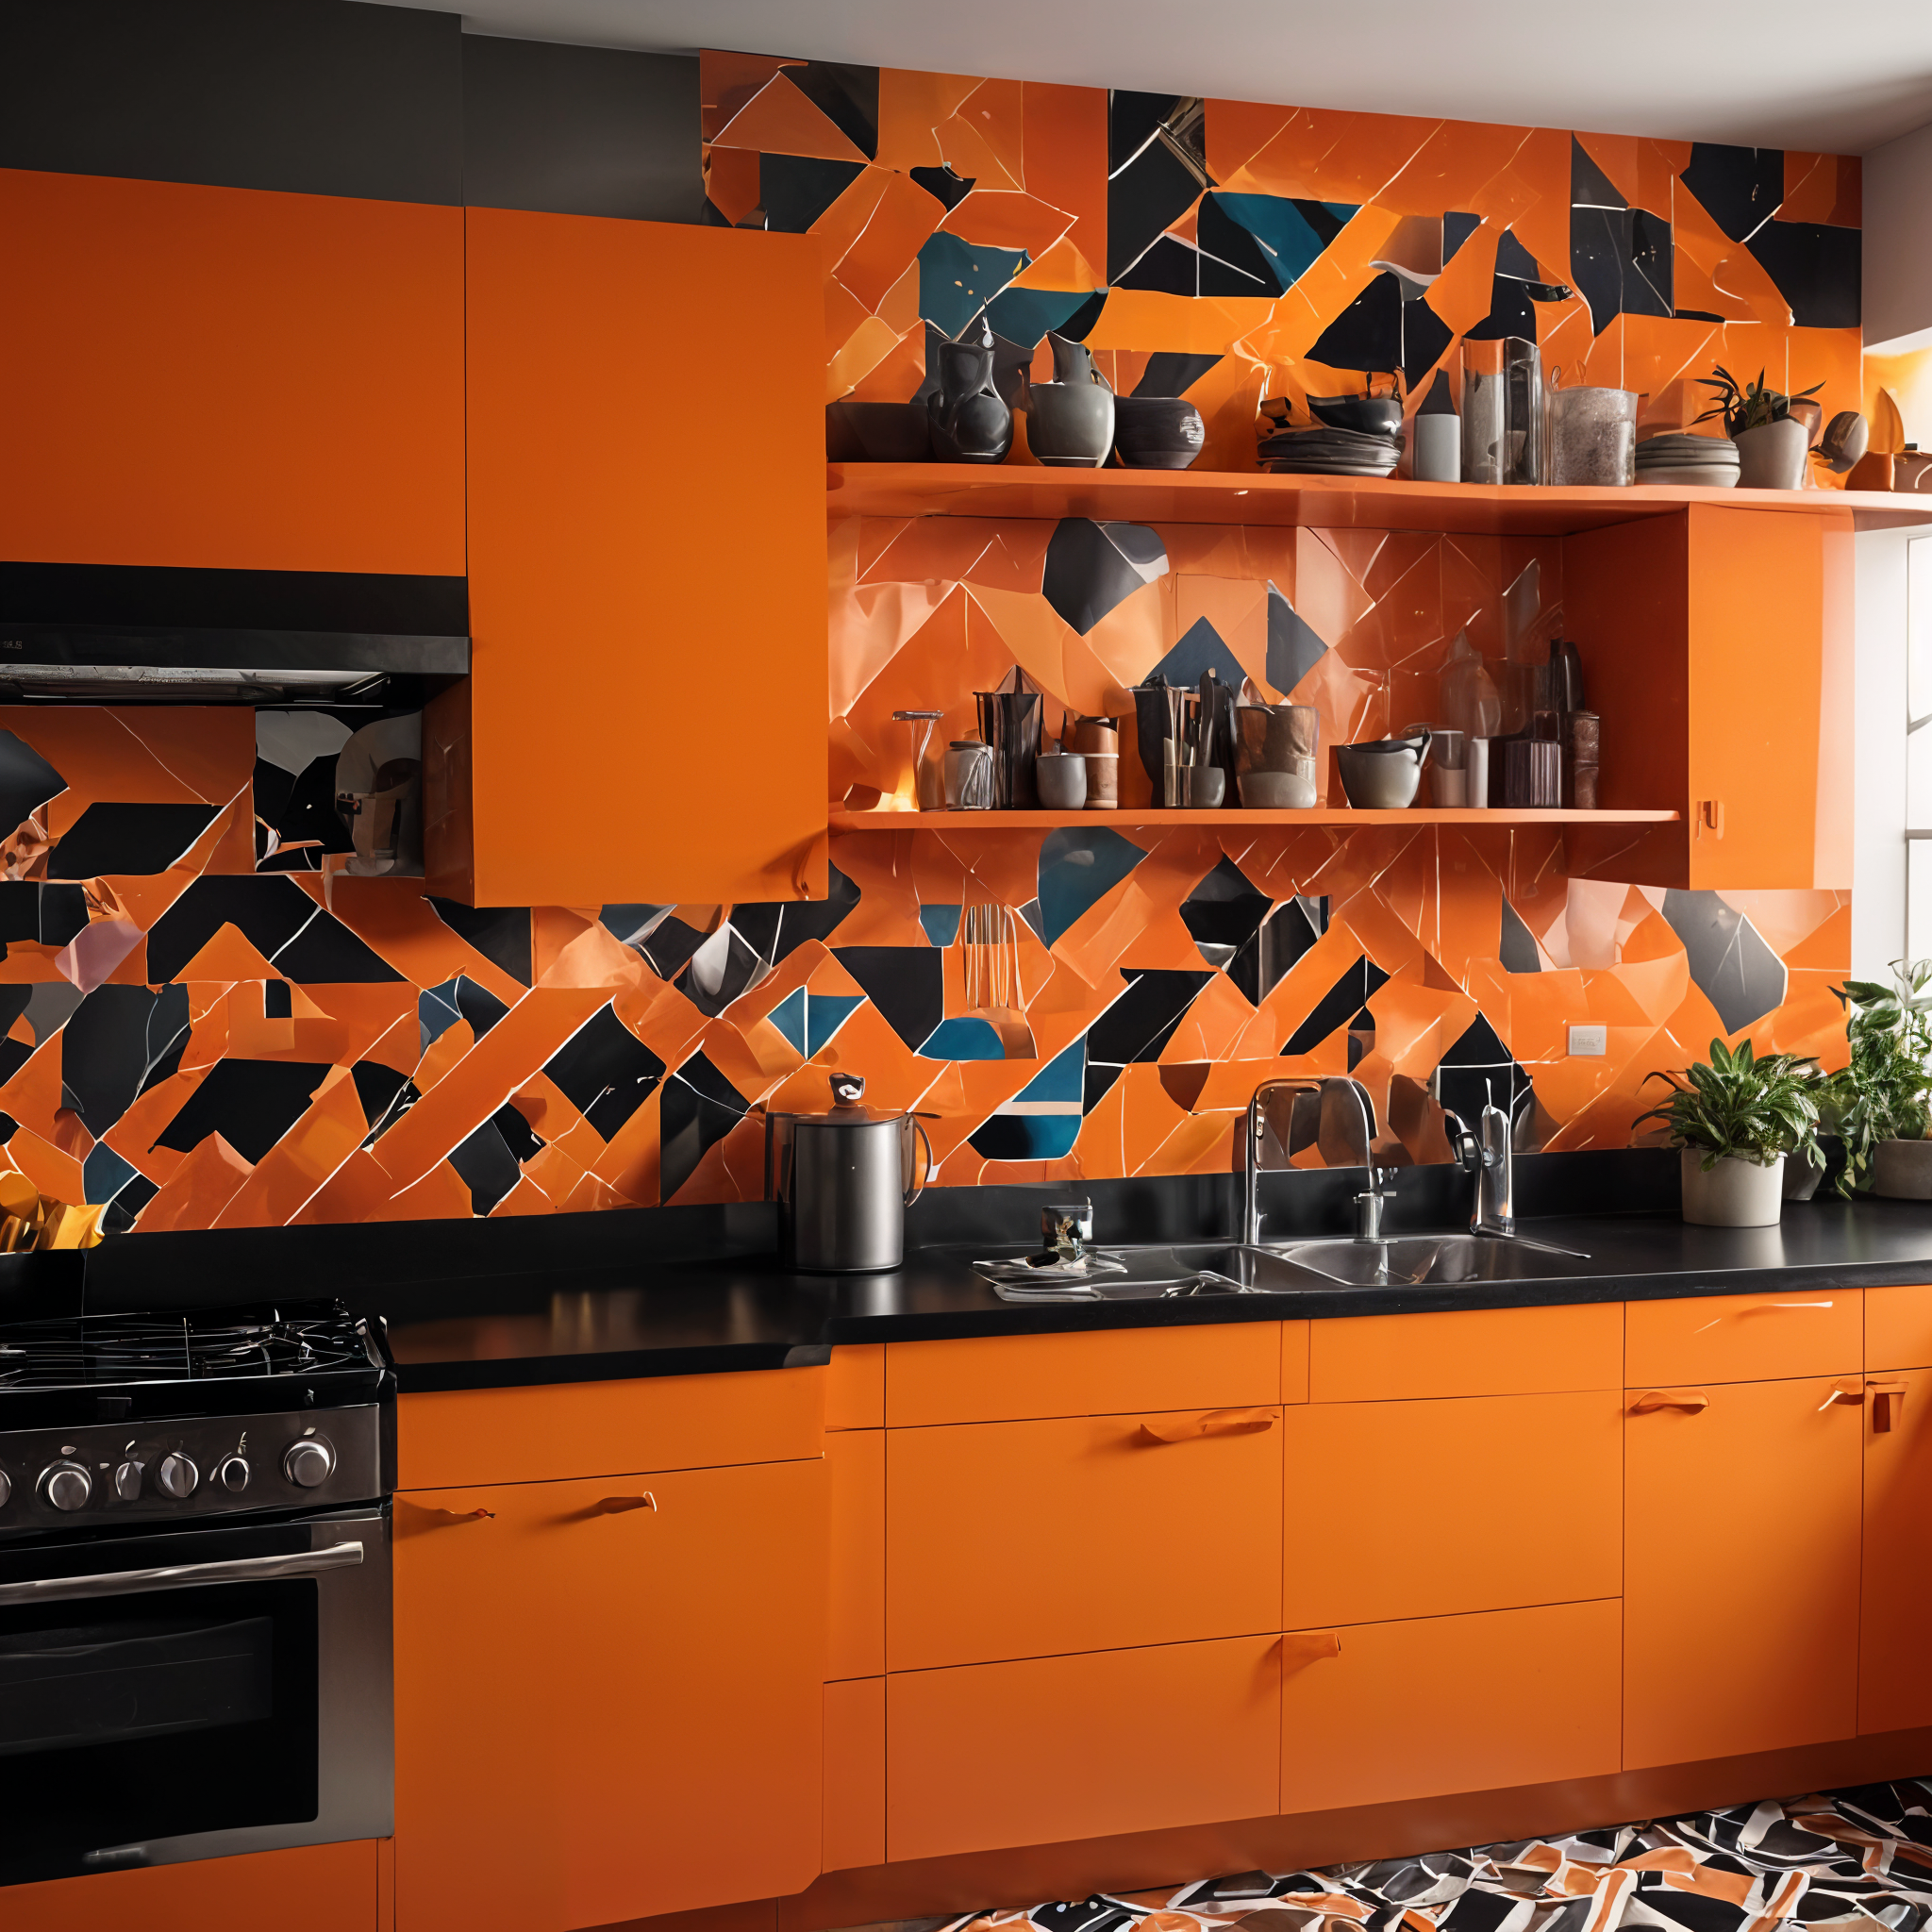 High-gloss Orange Cabinets, Black Quartz Countertops, Open Black Shelving, Geometric Tile Backsplash